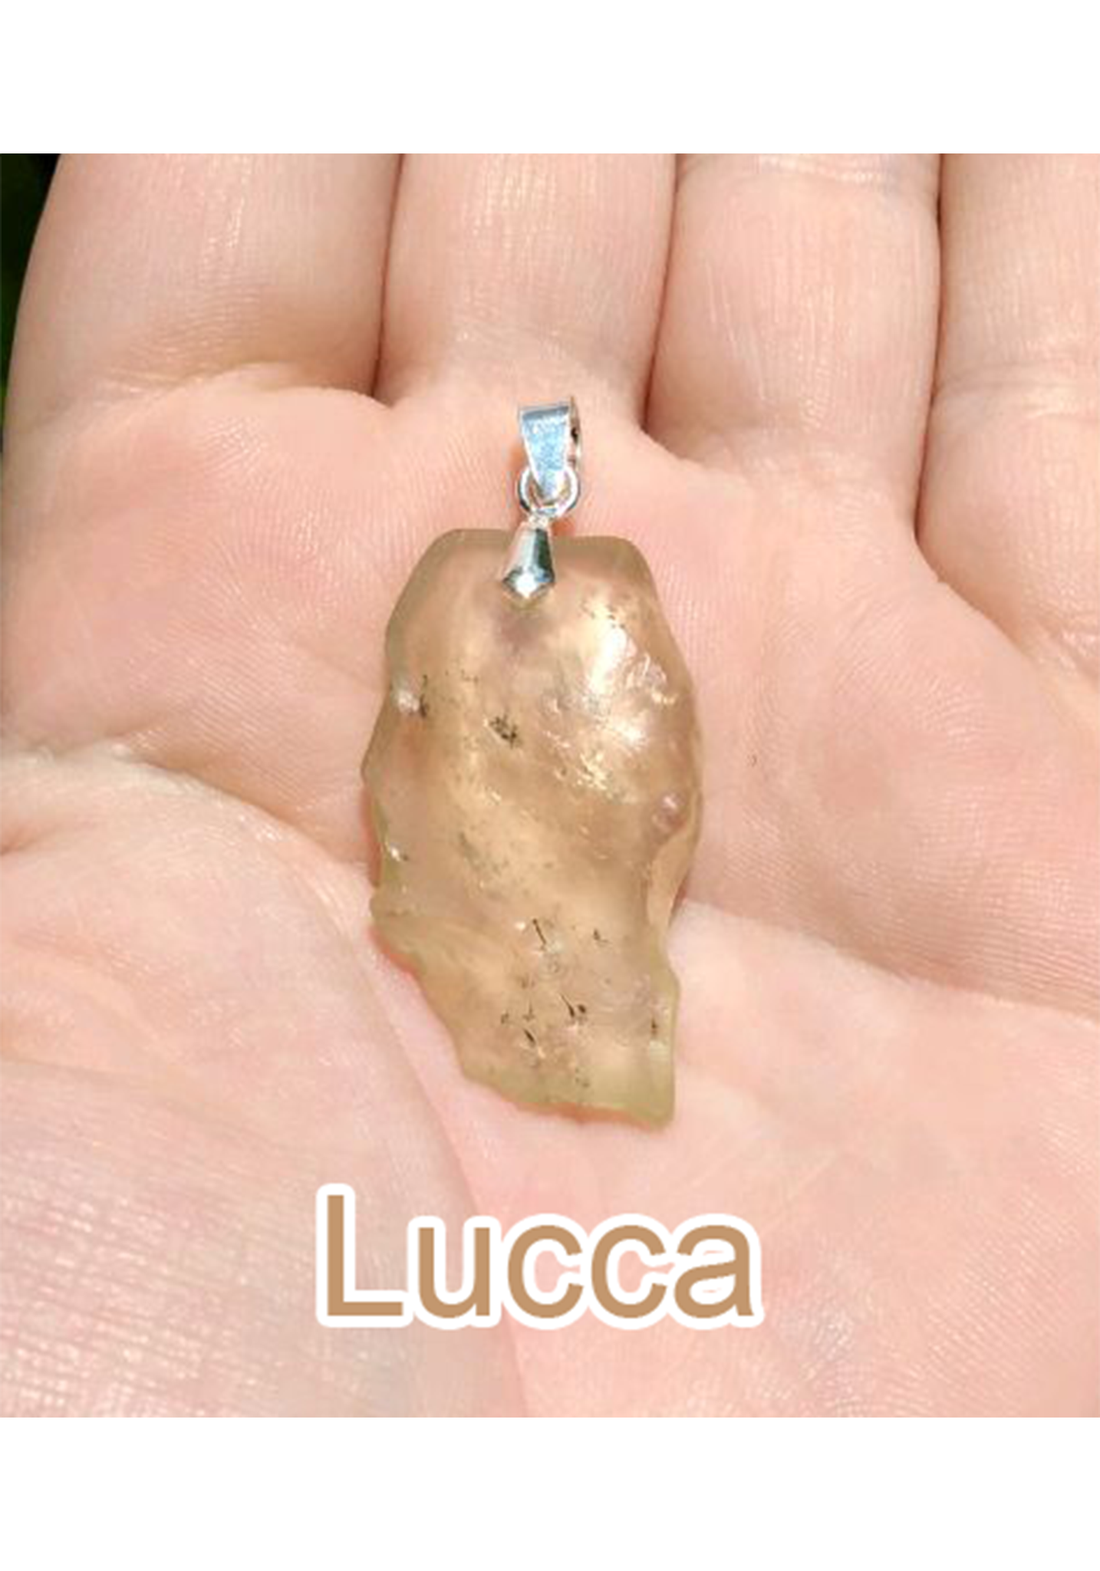 Libyan Desert Glass Sterling Silver Pendant - Choose Your Pendant!